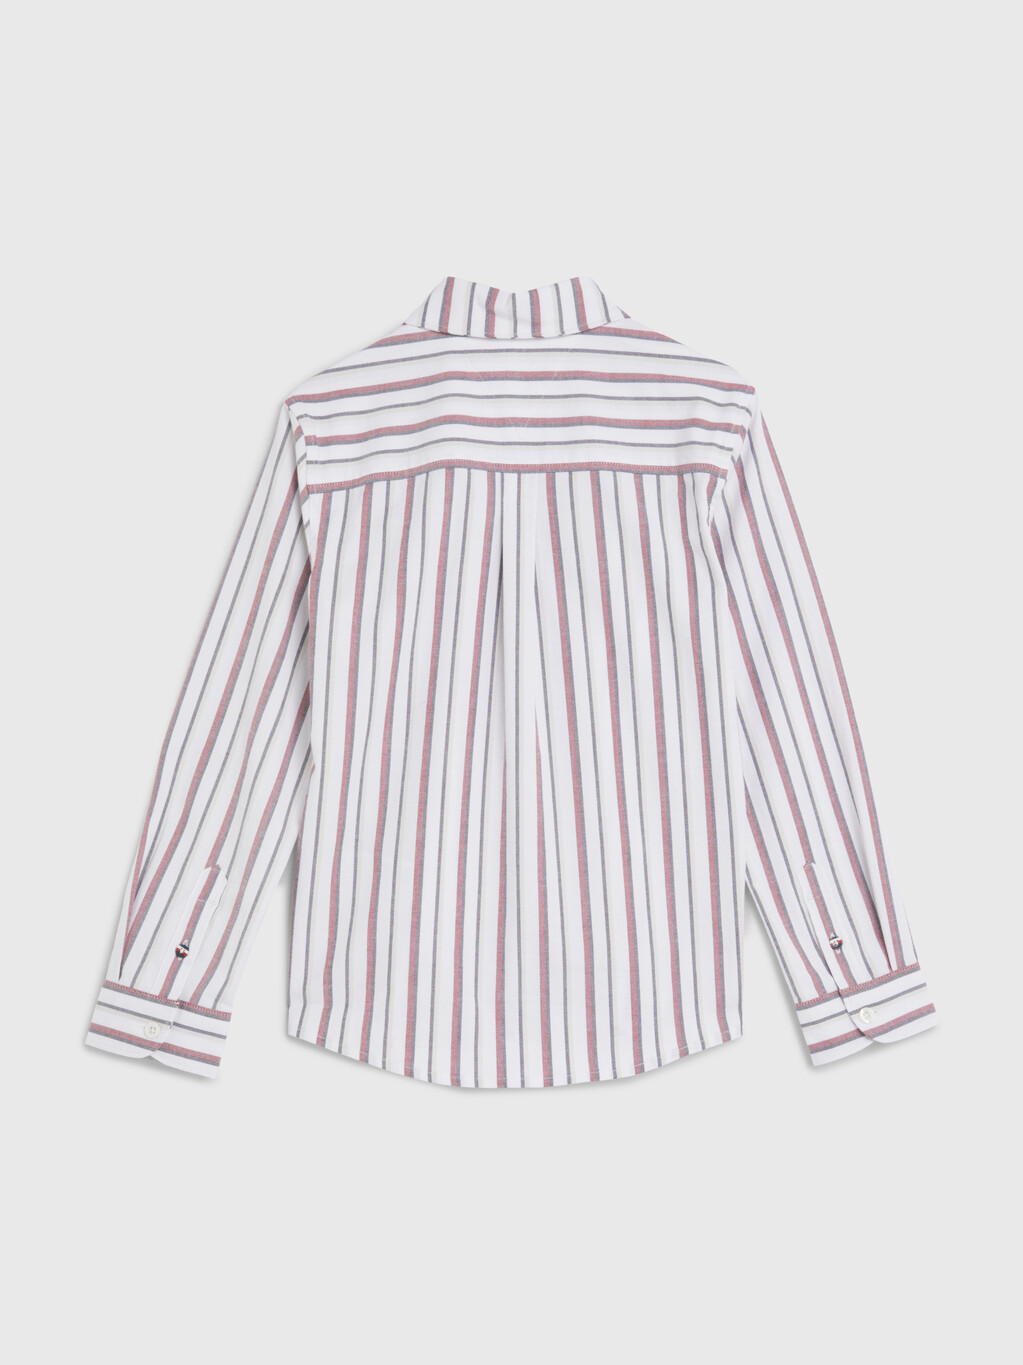 Global Stripe Monogram Embroidery Shirt, White Base / Global Stripes, hi-res